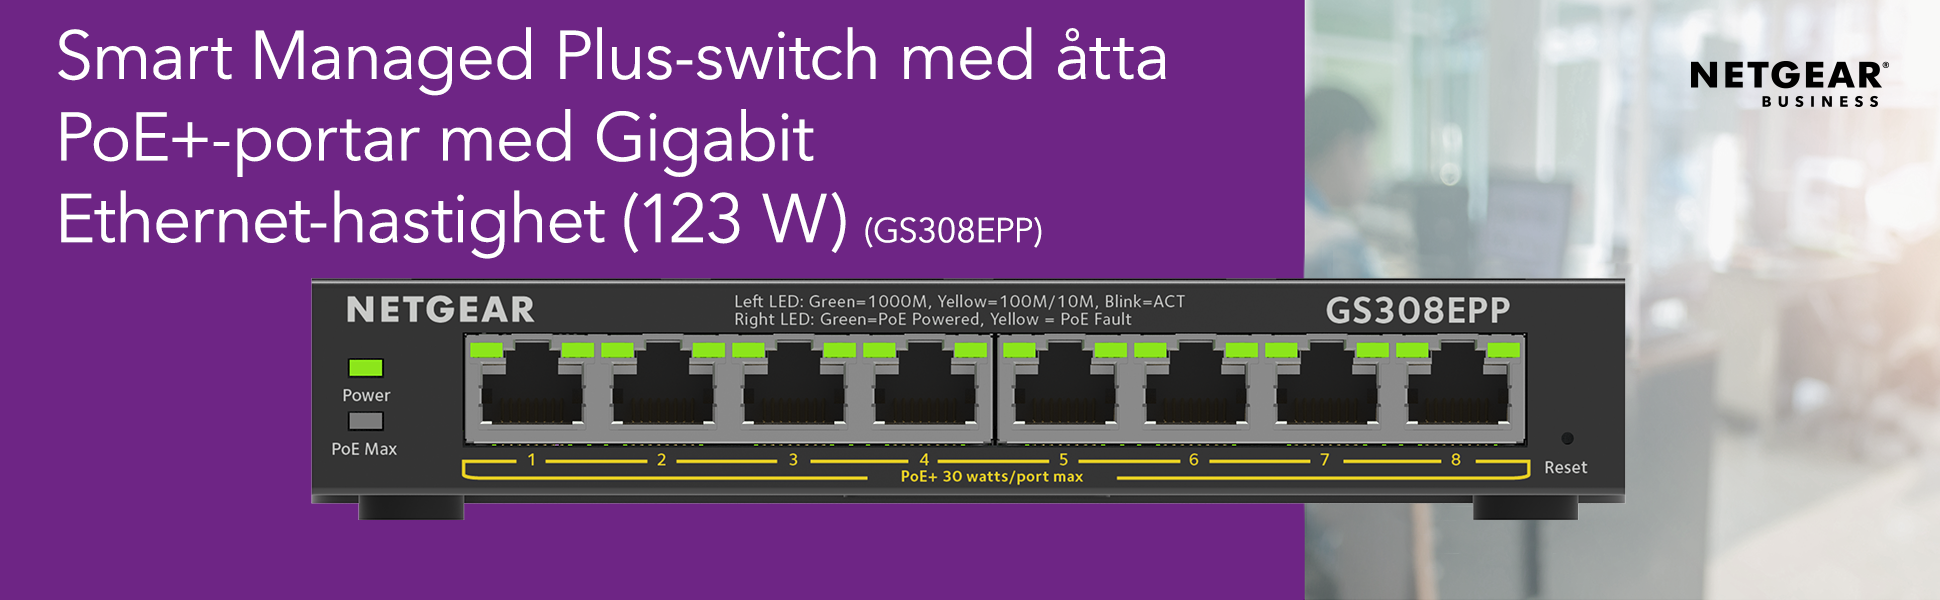 8-Port Gigabit Ethernet High-Power PoE+ Smart Managed Plus Switch